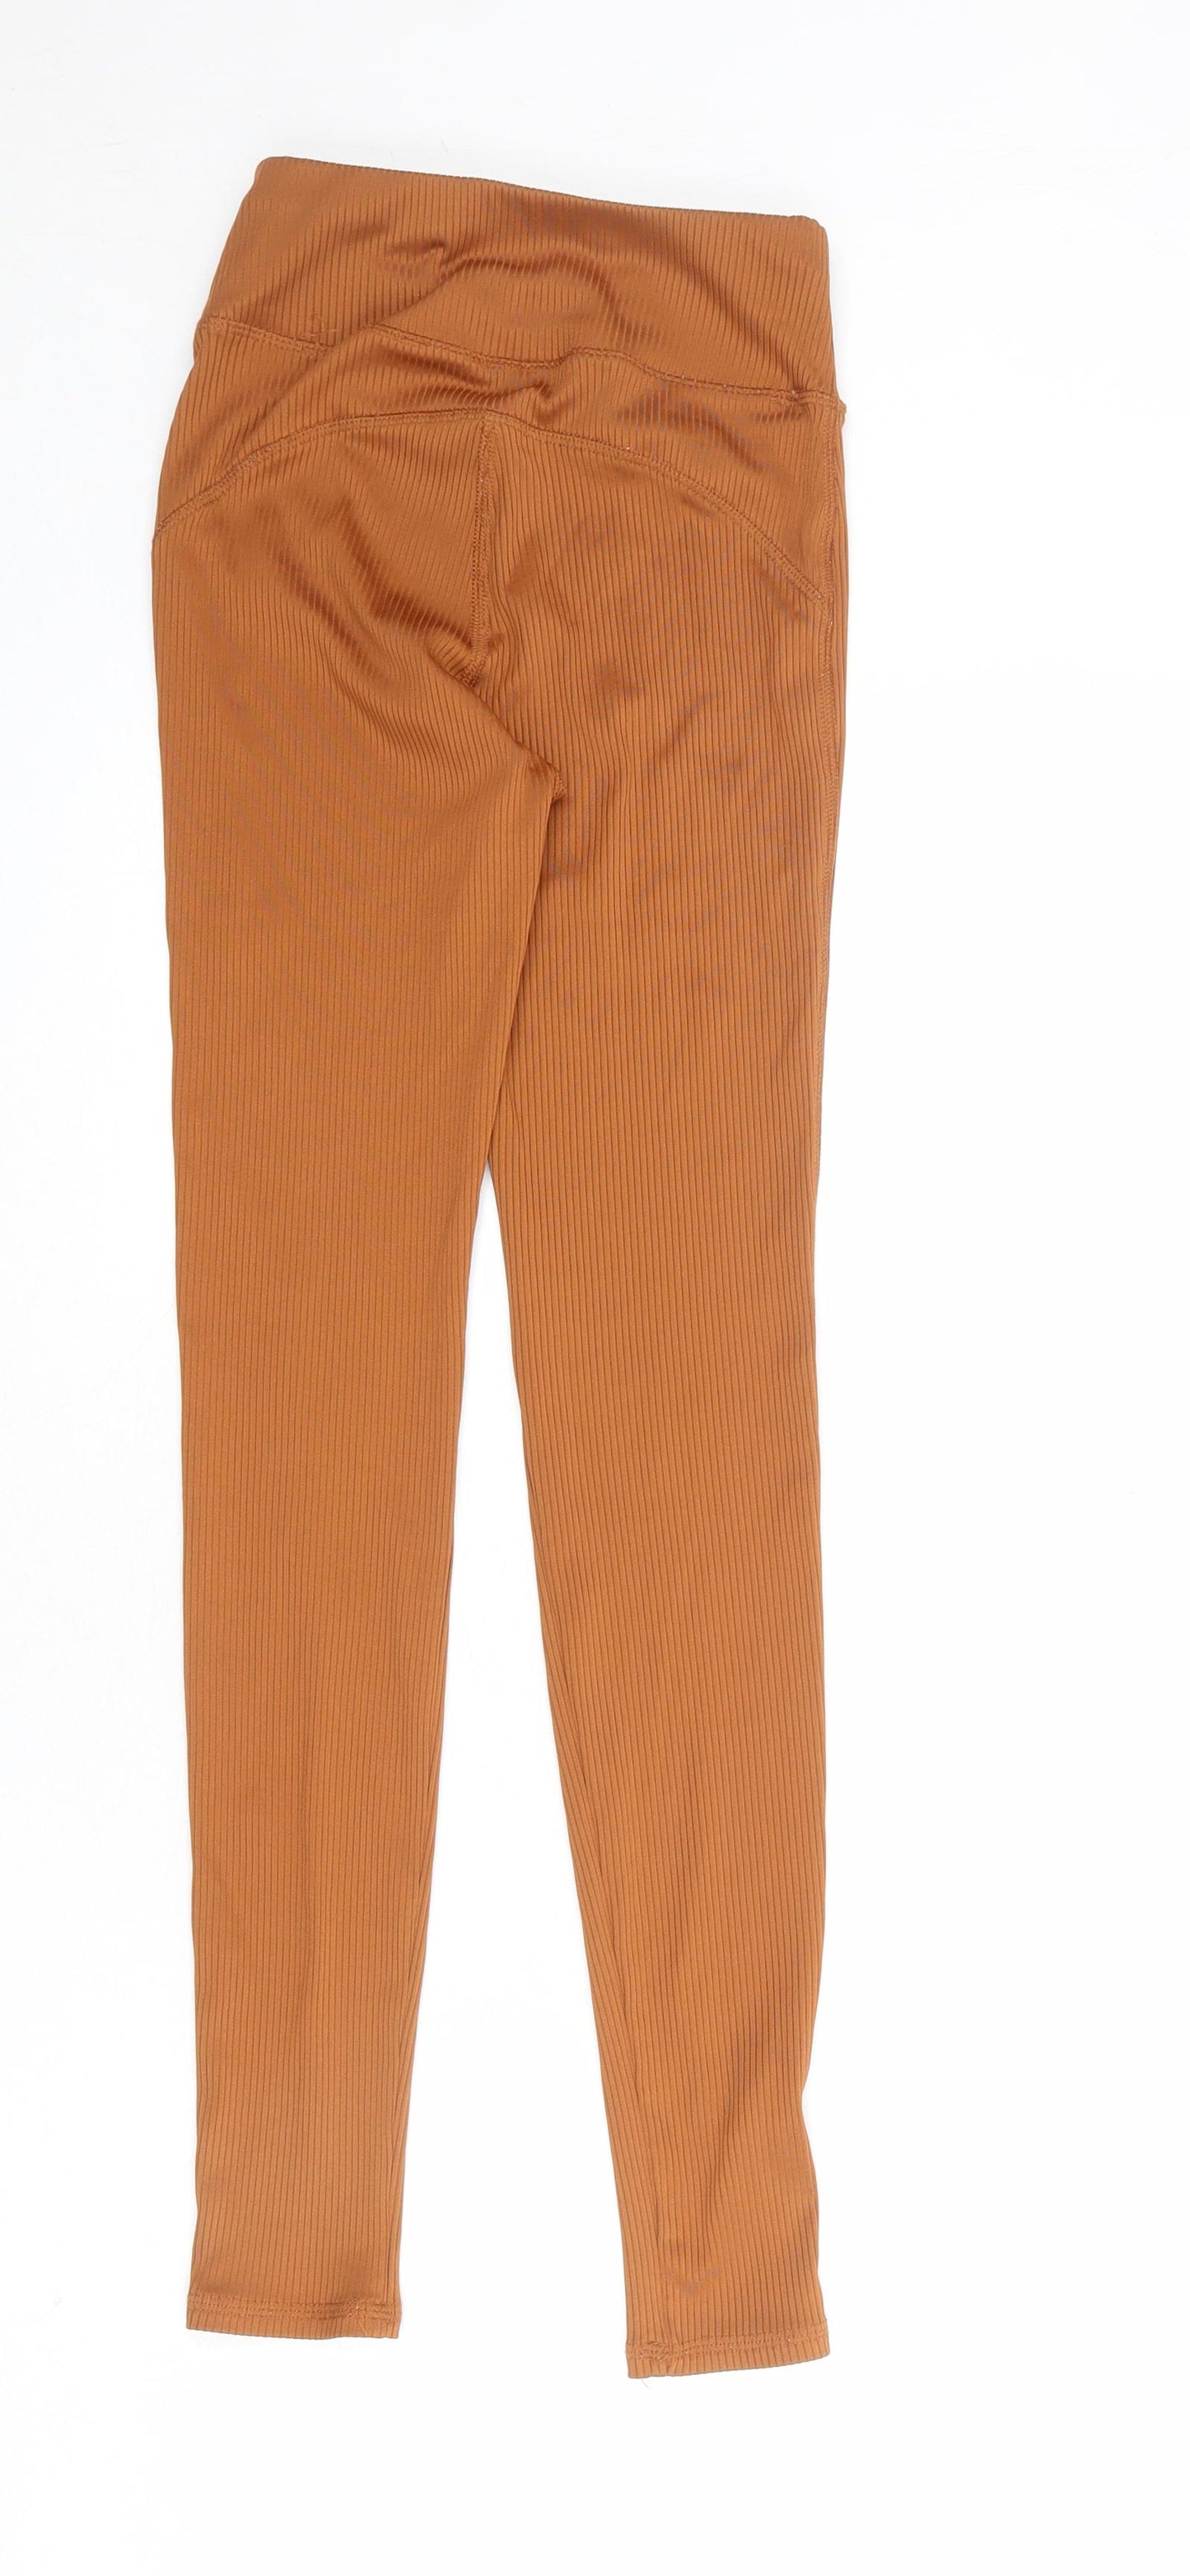 ASOS Womens Orange Polyester Carrot Leggings Size 8 L27 in - Ribbed